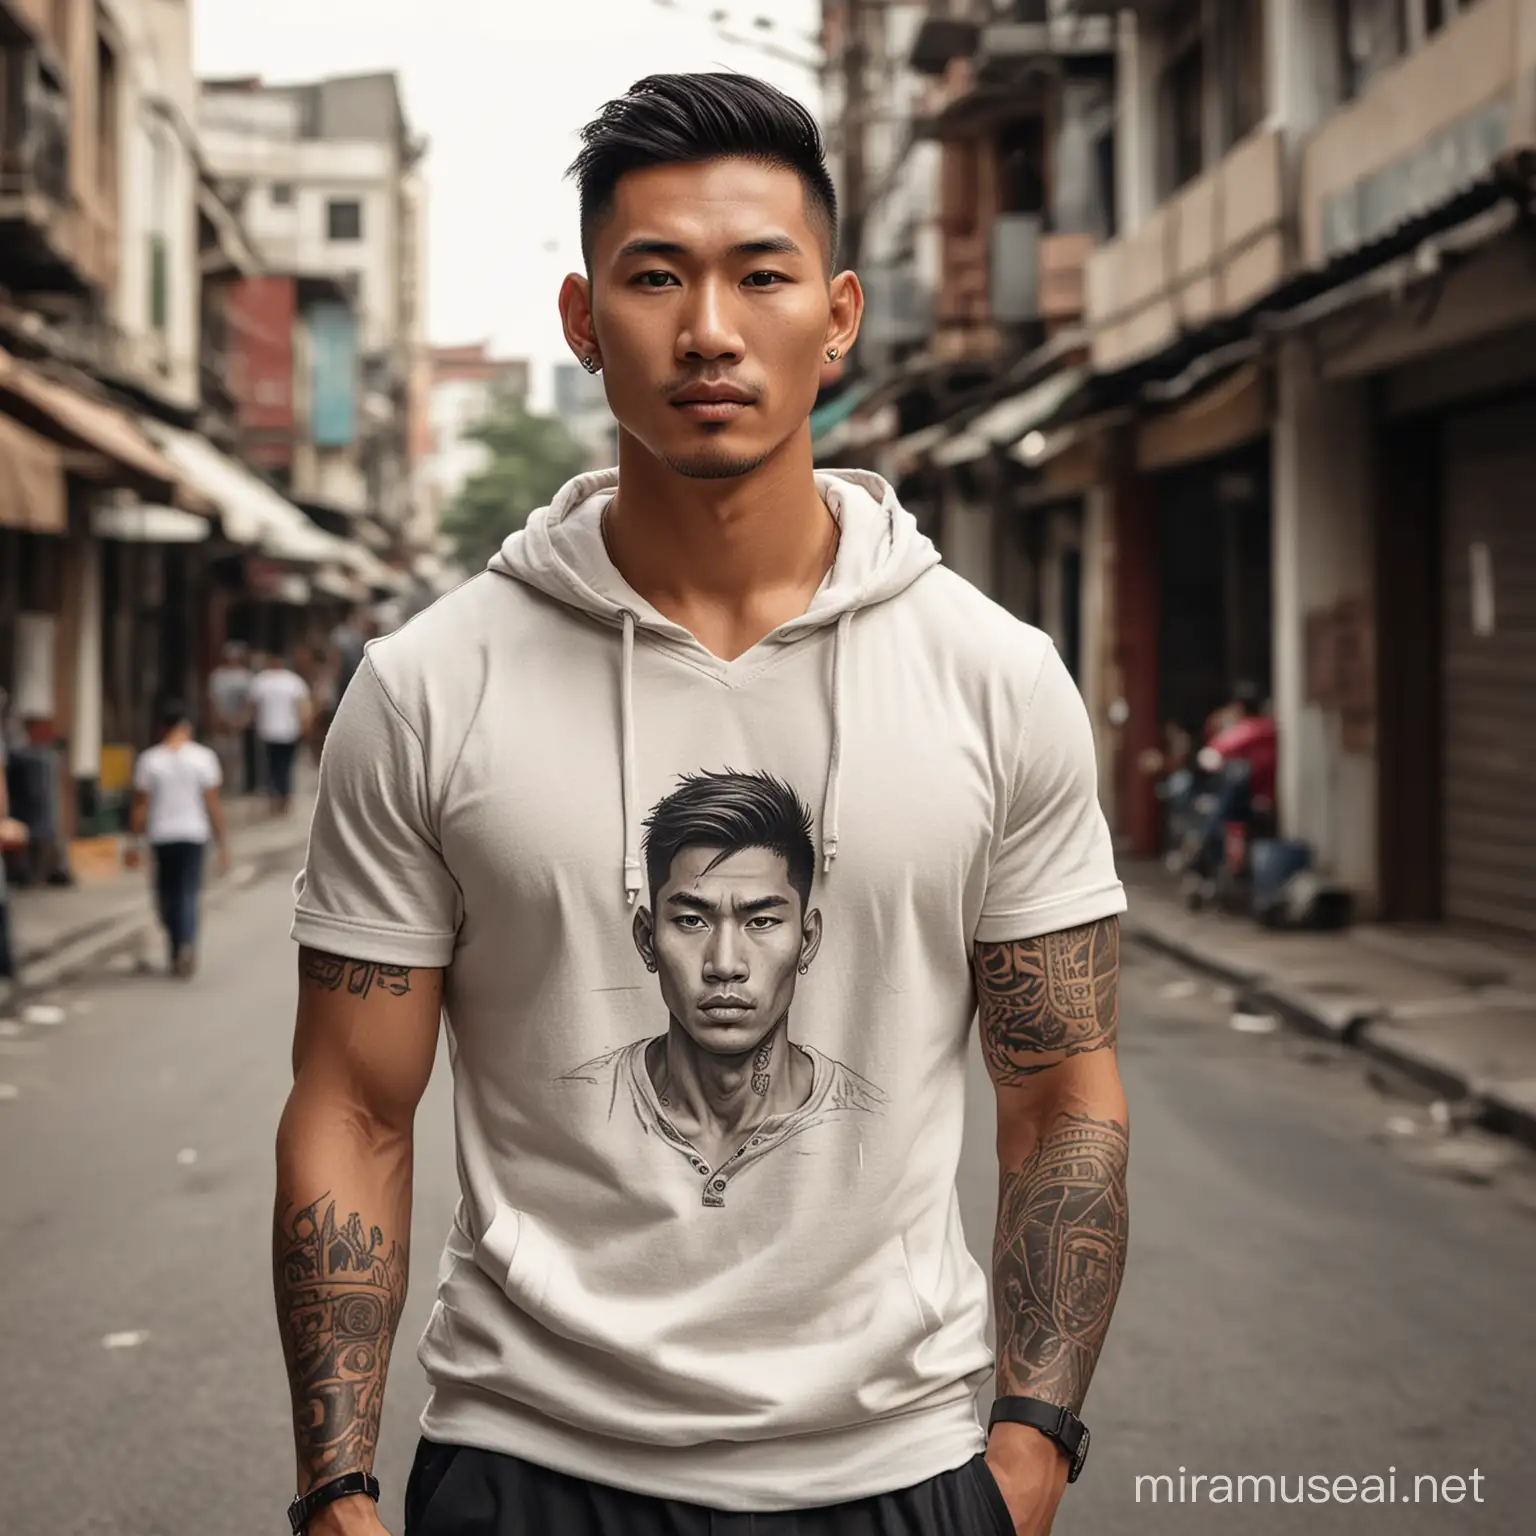 Stylish Asian Man Walking on Jakarta Urban Street